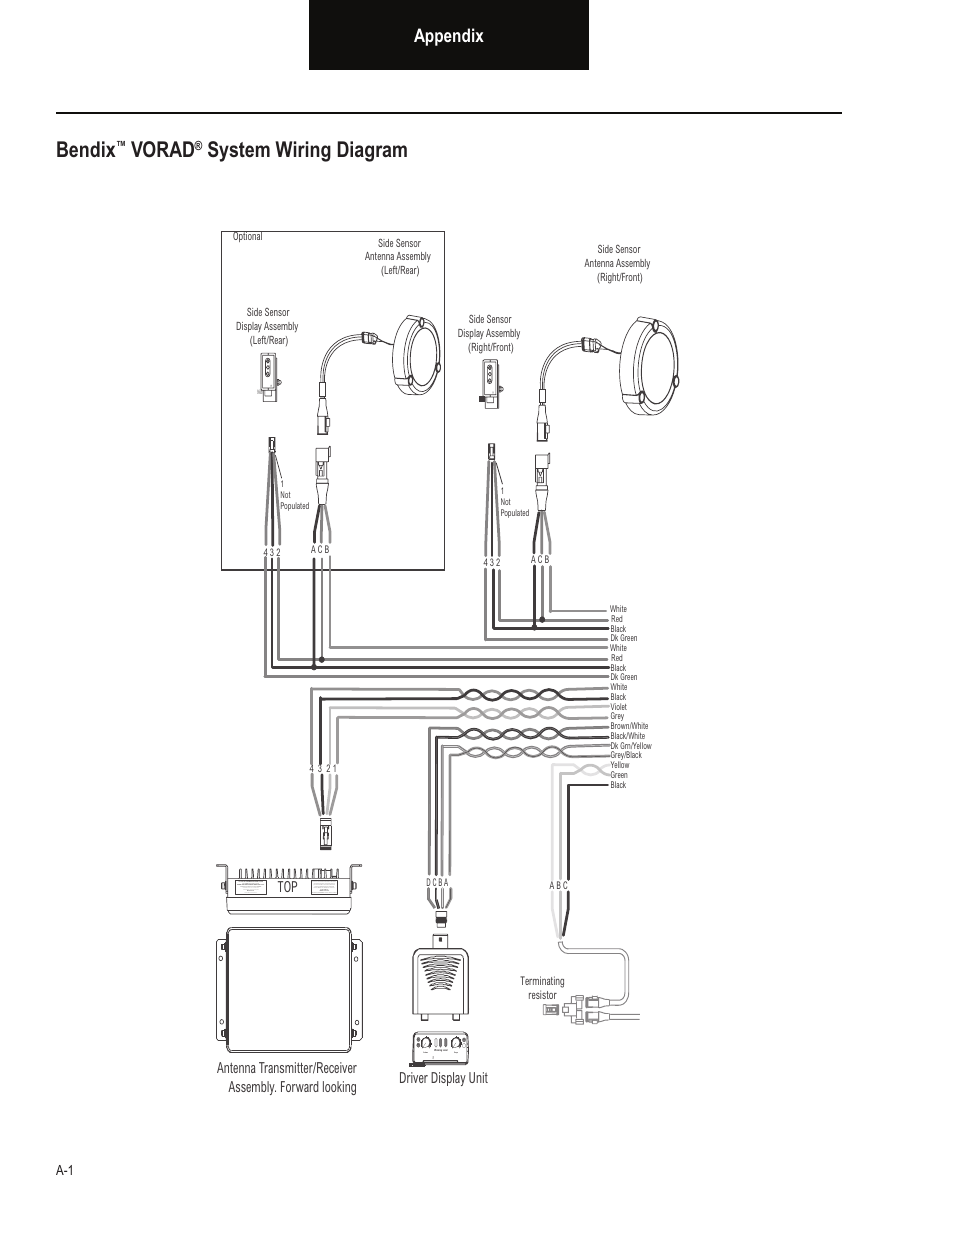 Bendix, Vorad, System wiring diagram | Bendix Commercial Vehicle